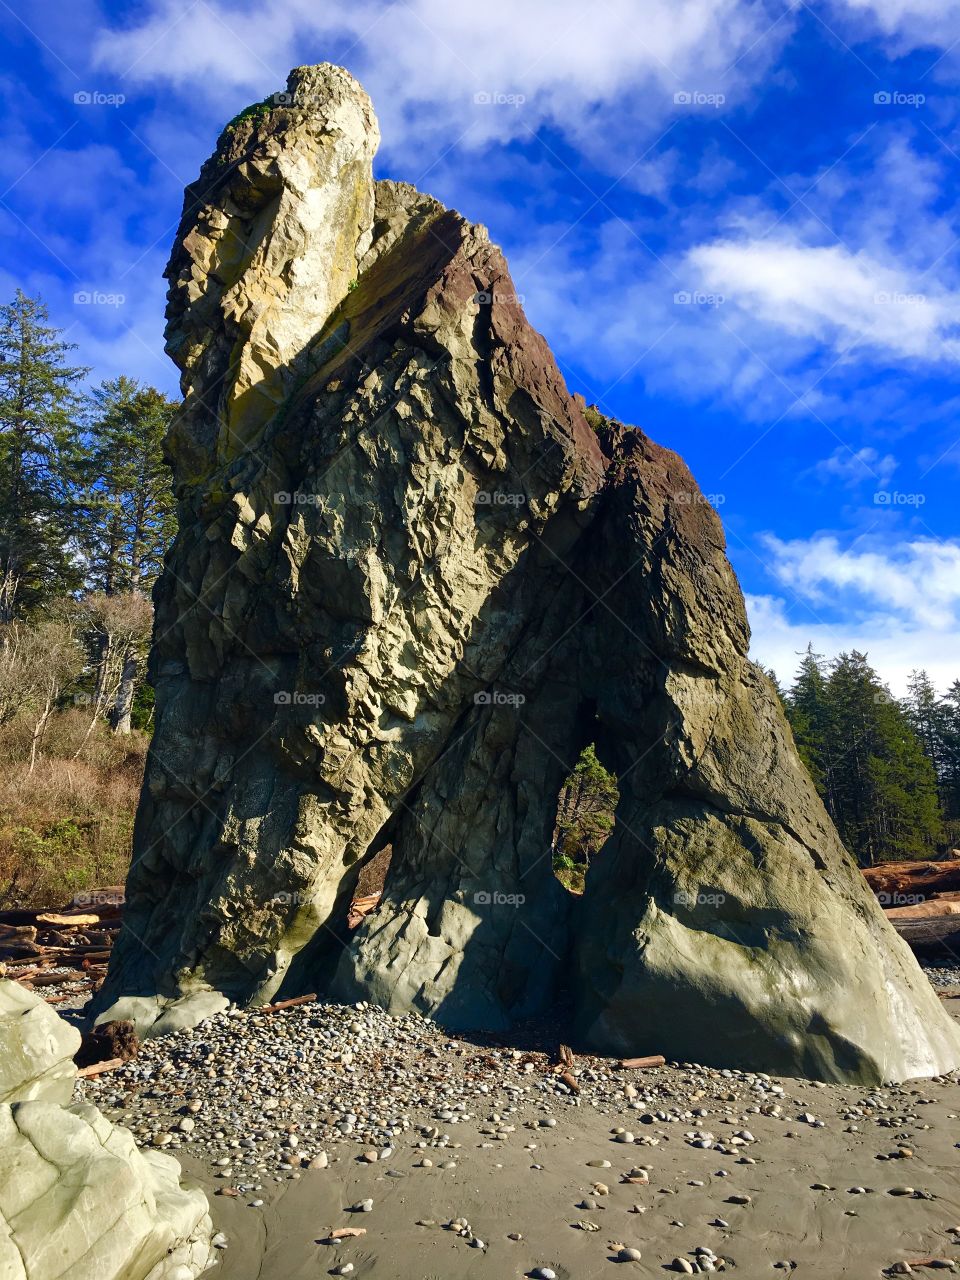 
Gorilla Rock, Ruby Beach, Pacific Ocean, Olympic Peninsula, Washington State 